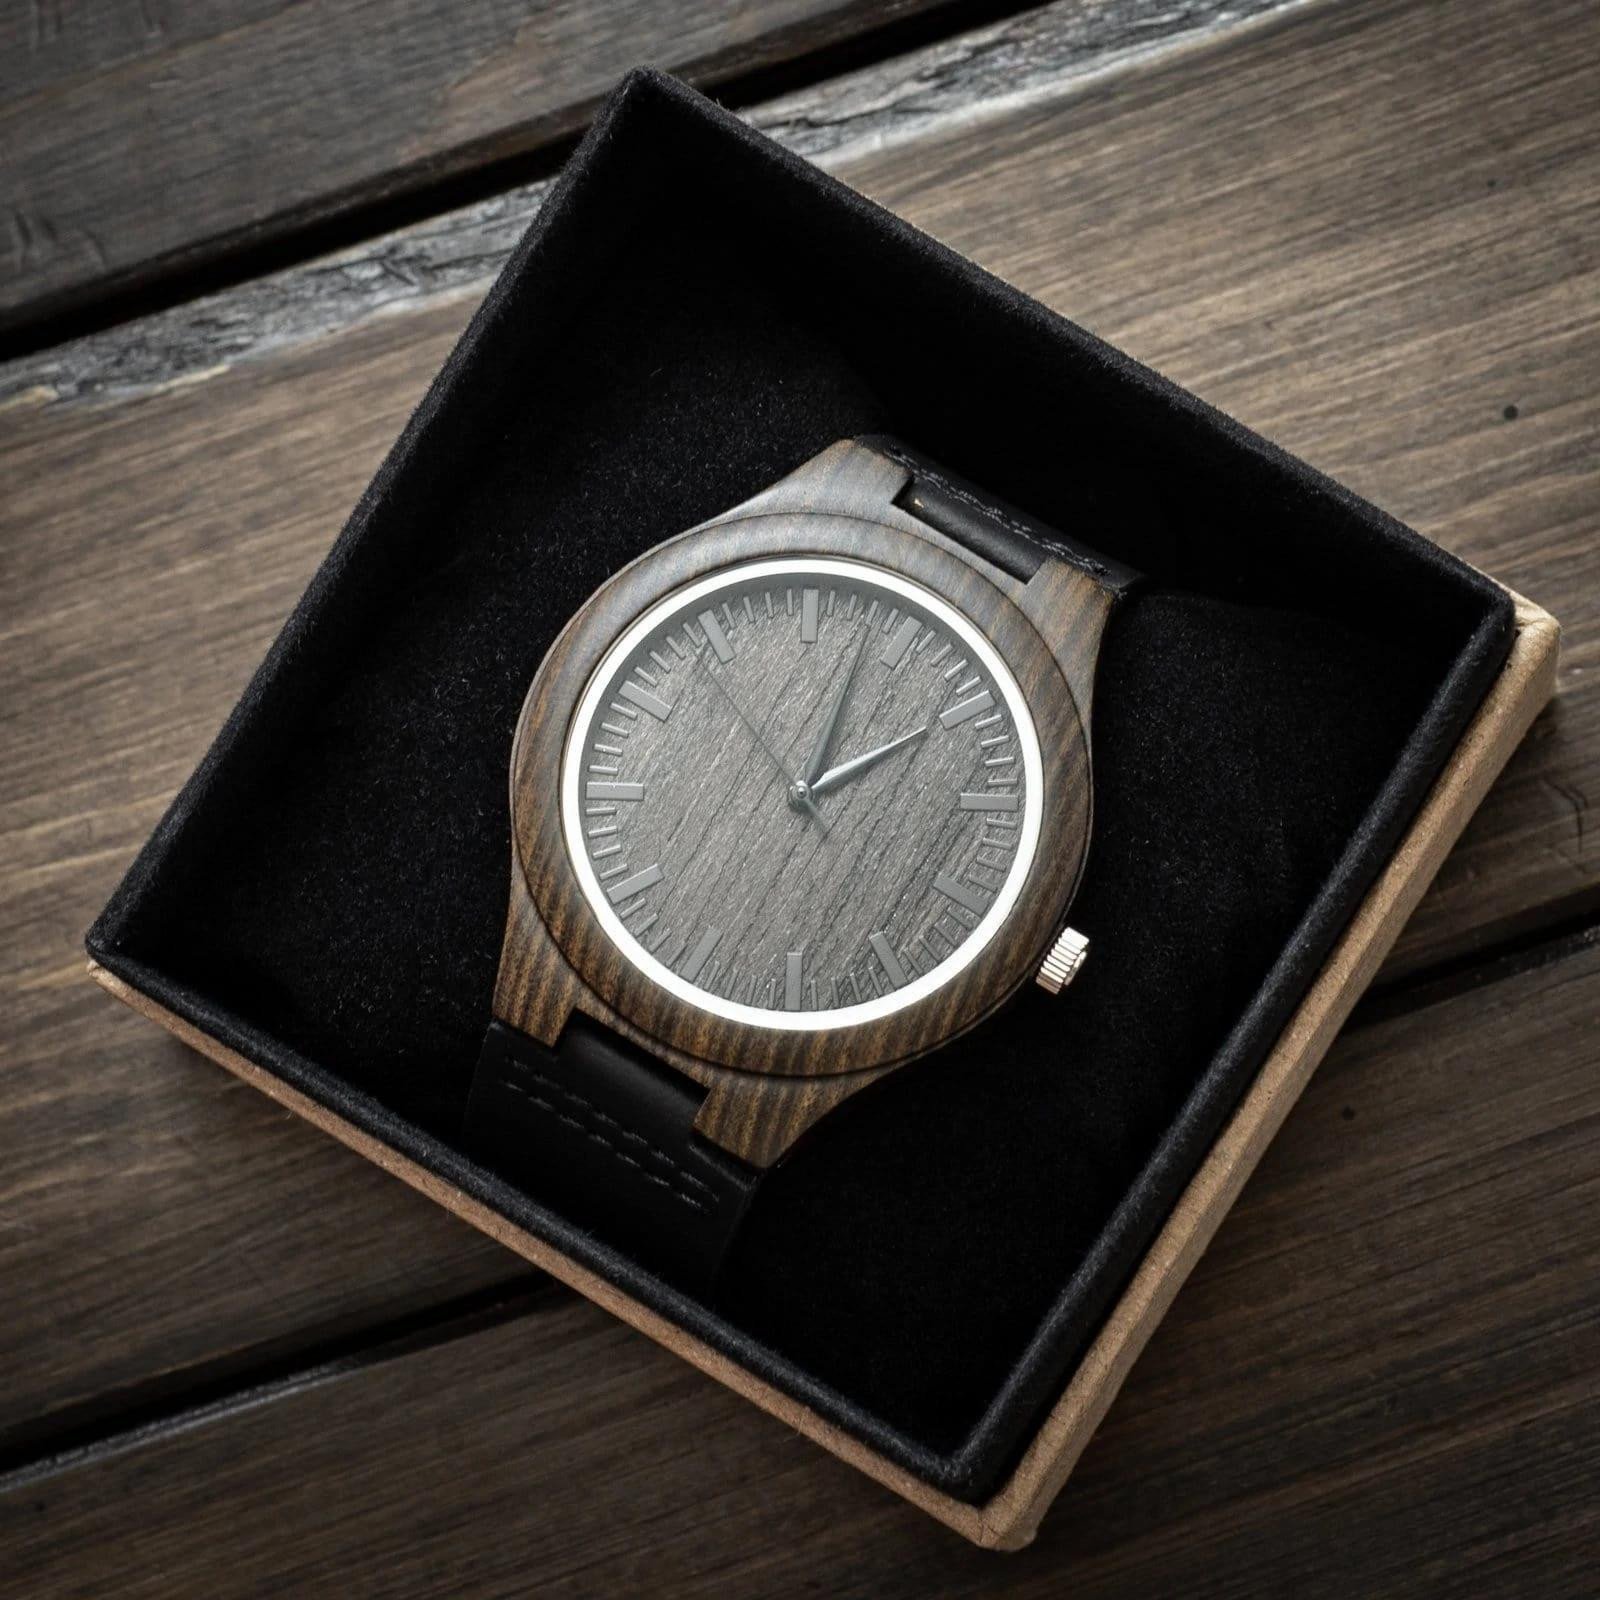 Wonderful Gift For Husband Fiance Love You Longer Impressive Design Engraved Wooden Watch